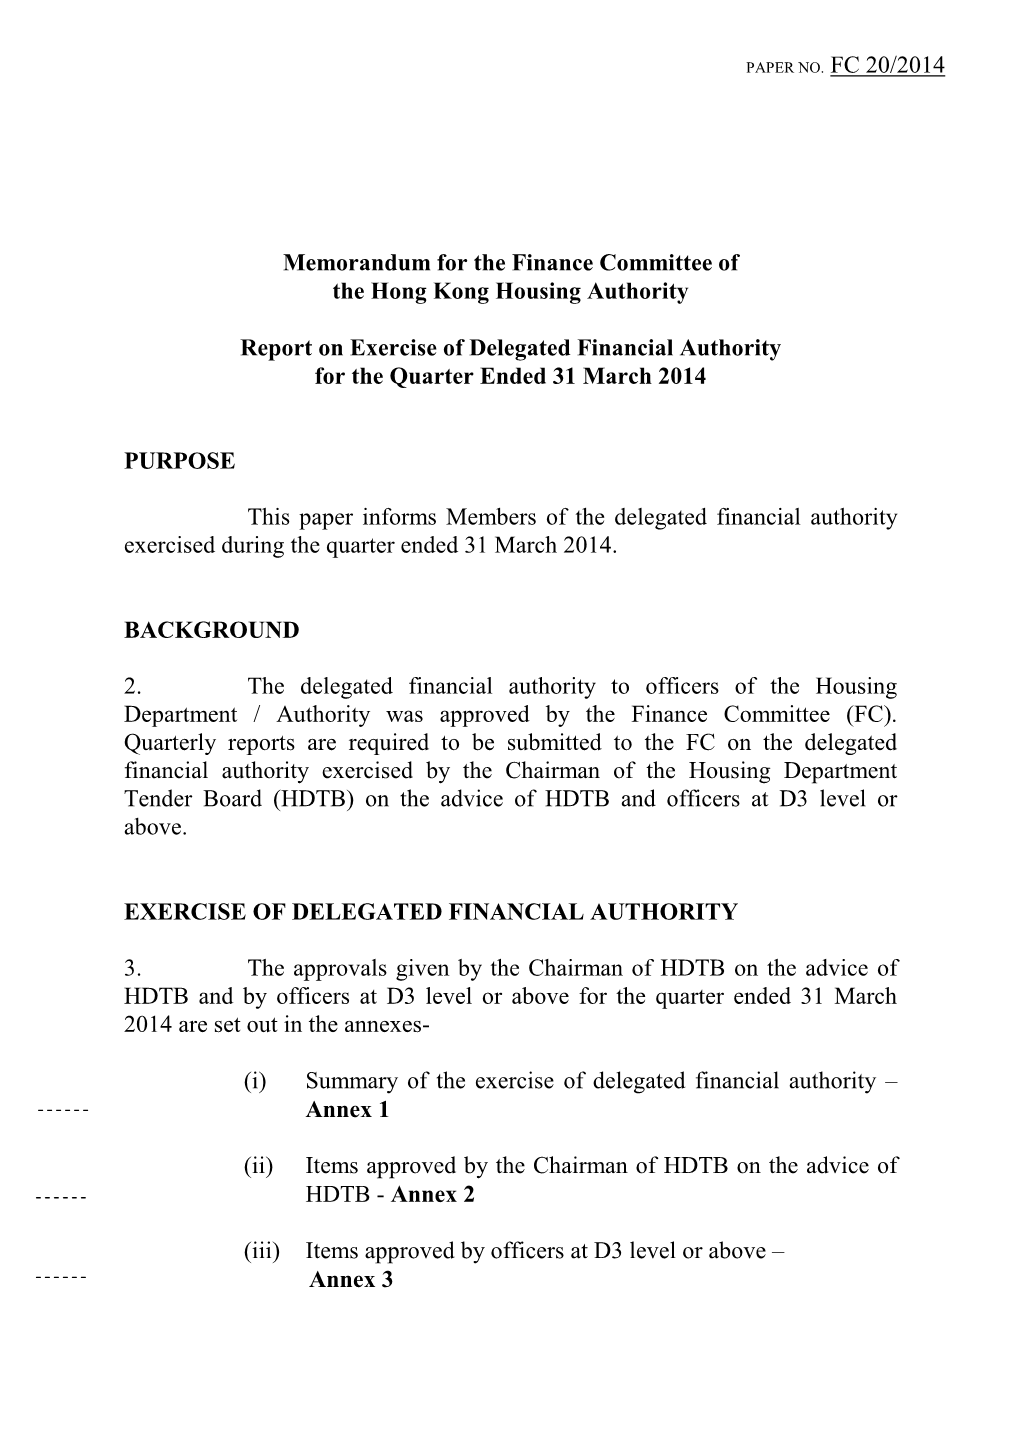 Memorandum for the Finance Committee of the Hong Kong Housing Authority